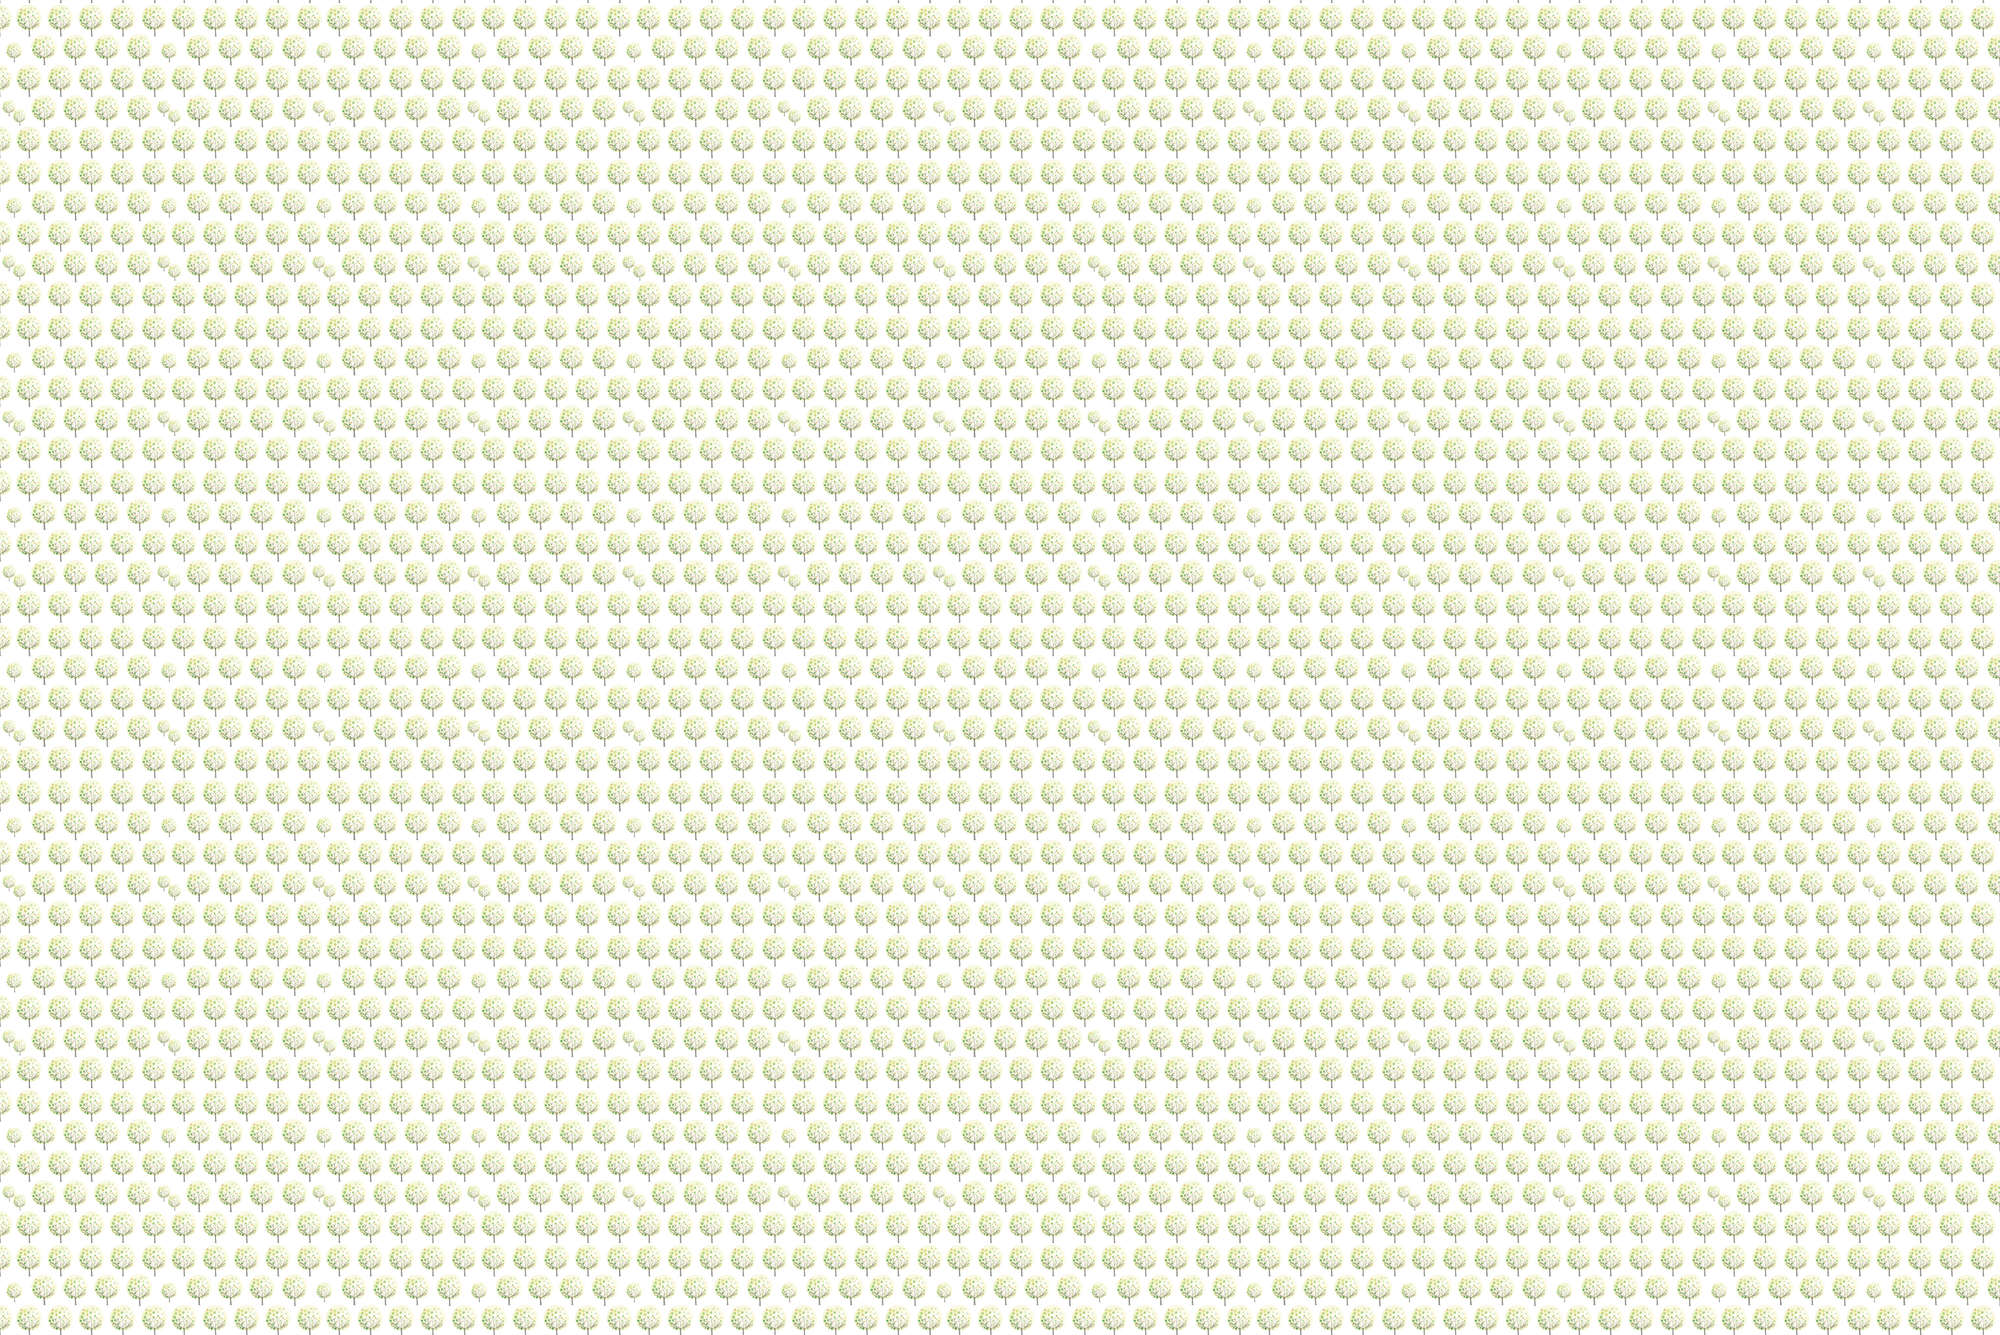             Ontwerpbehang Bospatroon in Groen op Witte Achtergrond op Textuurvlies
        